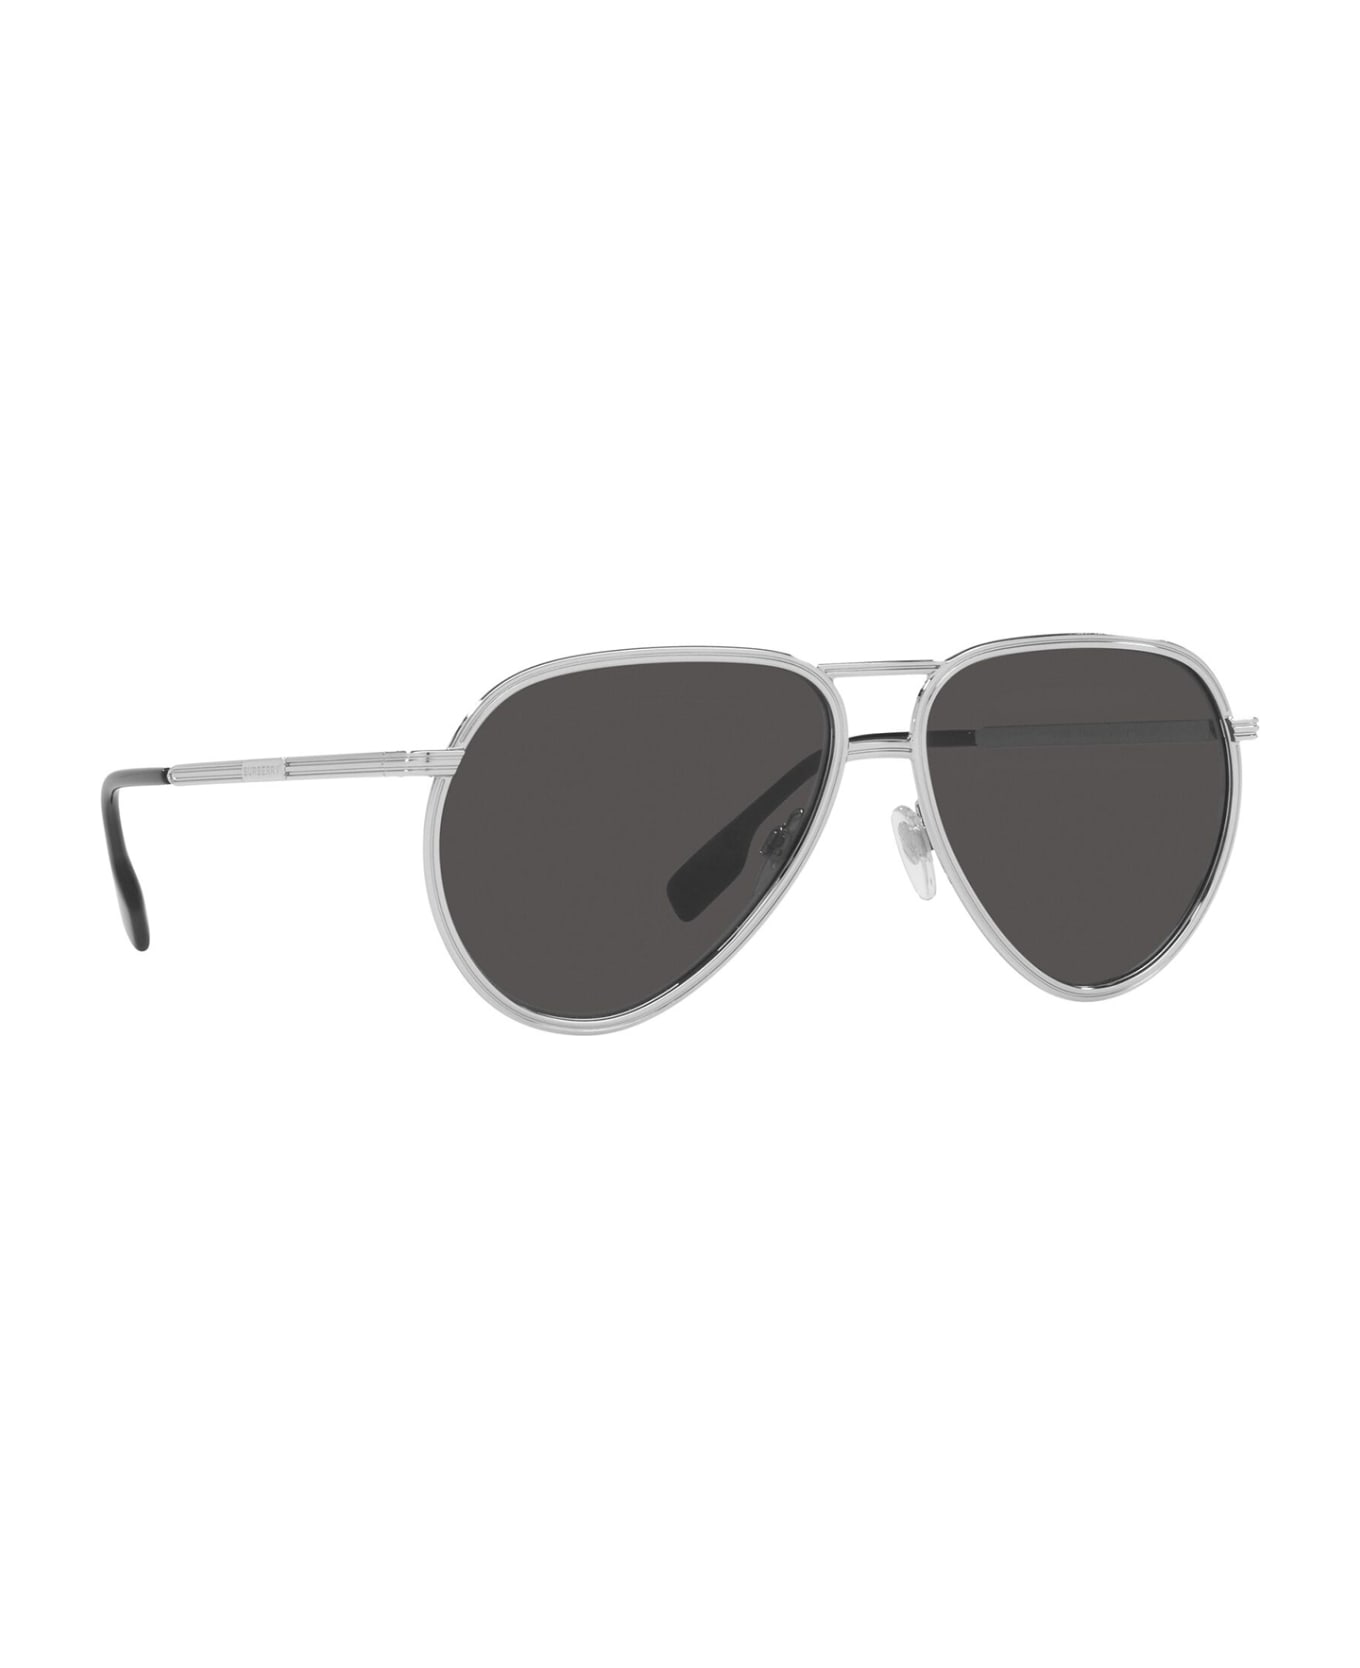 Burberry Eyewear Be3135 Silver Sunglasses - Silver